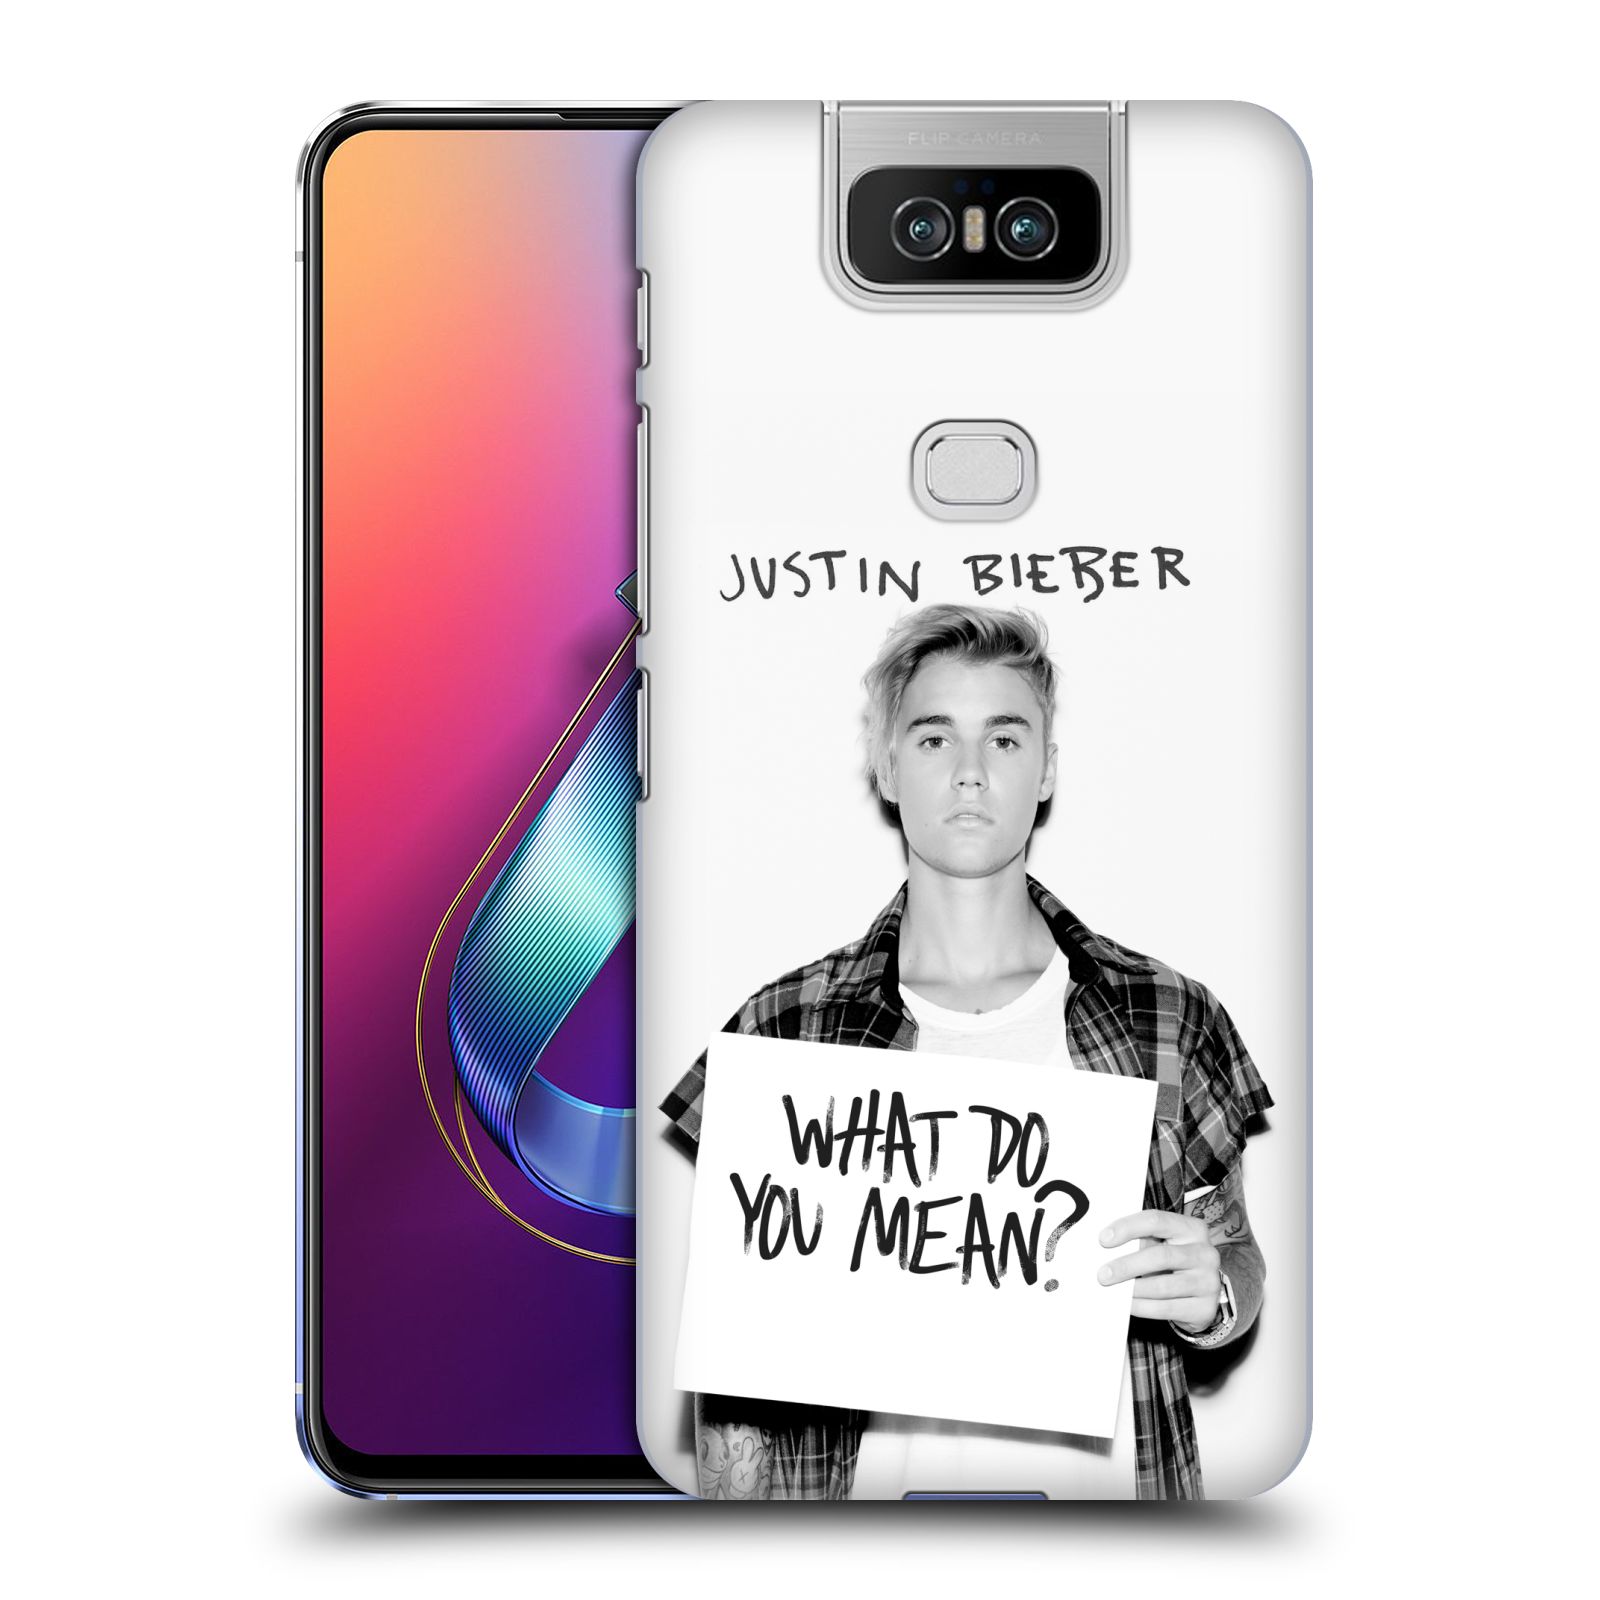 Pouzdro na mobil Asus Zenfone 6 ZS630KL - HEAD CASE - Justin Bieber foto Purpose What do you mean